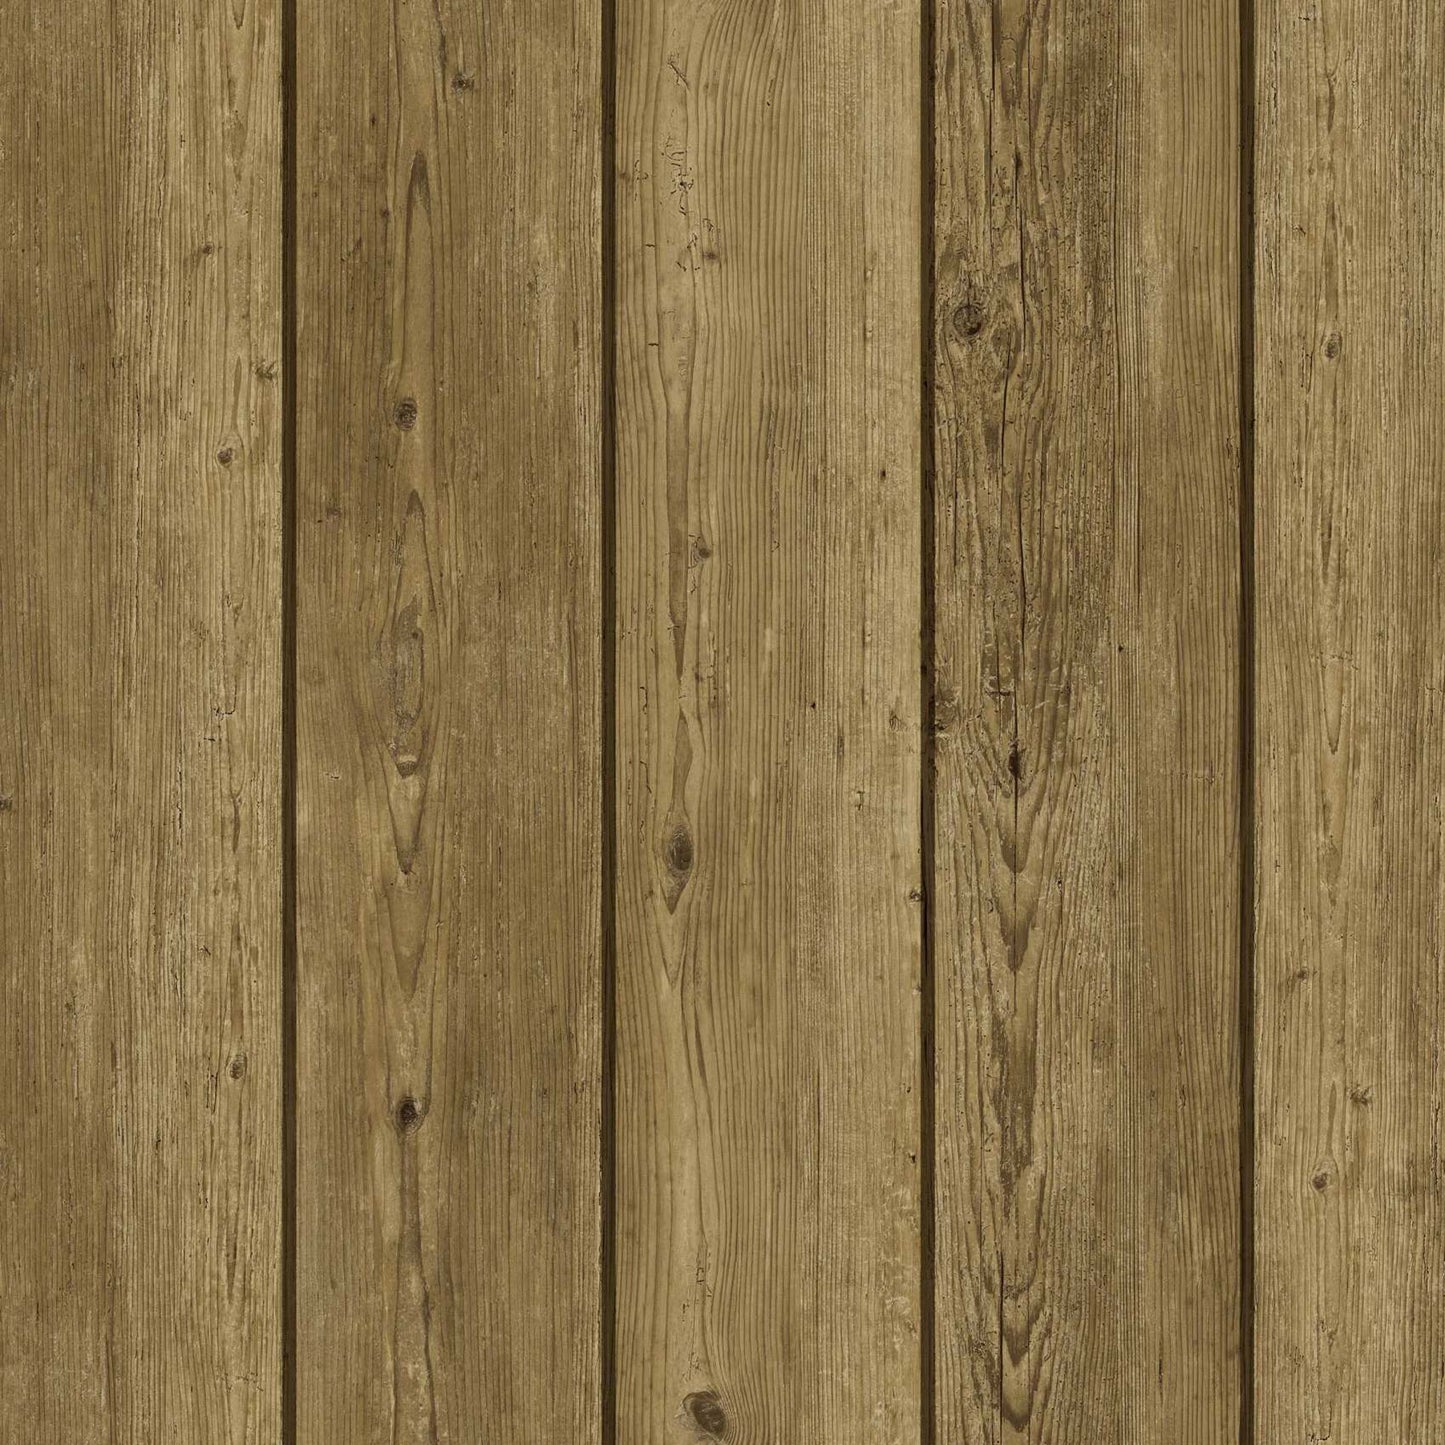 Rustic Charm Wood Texture Wallpaper